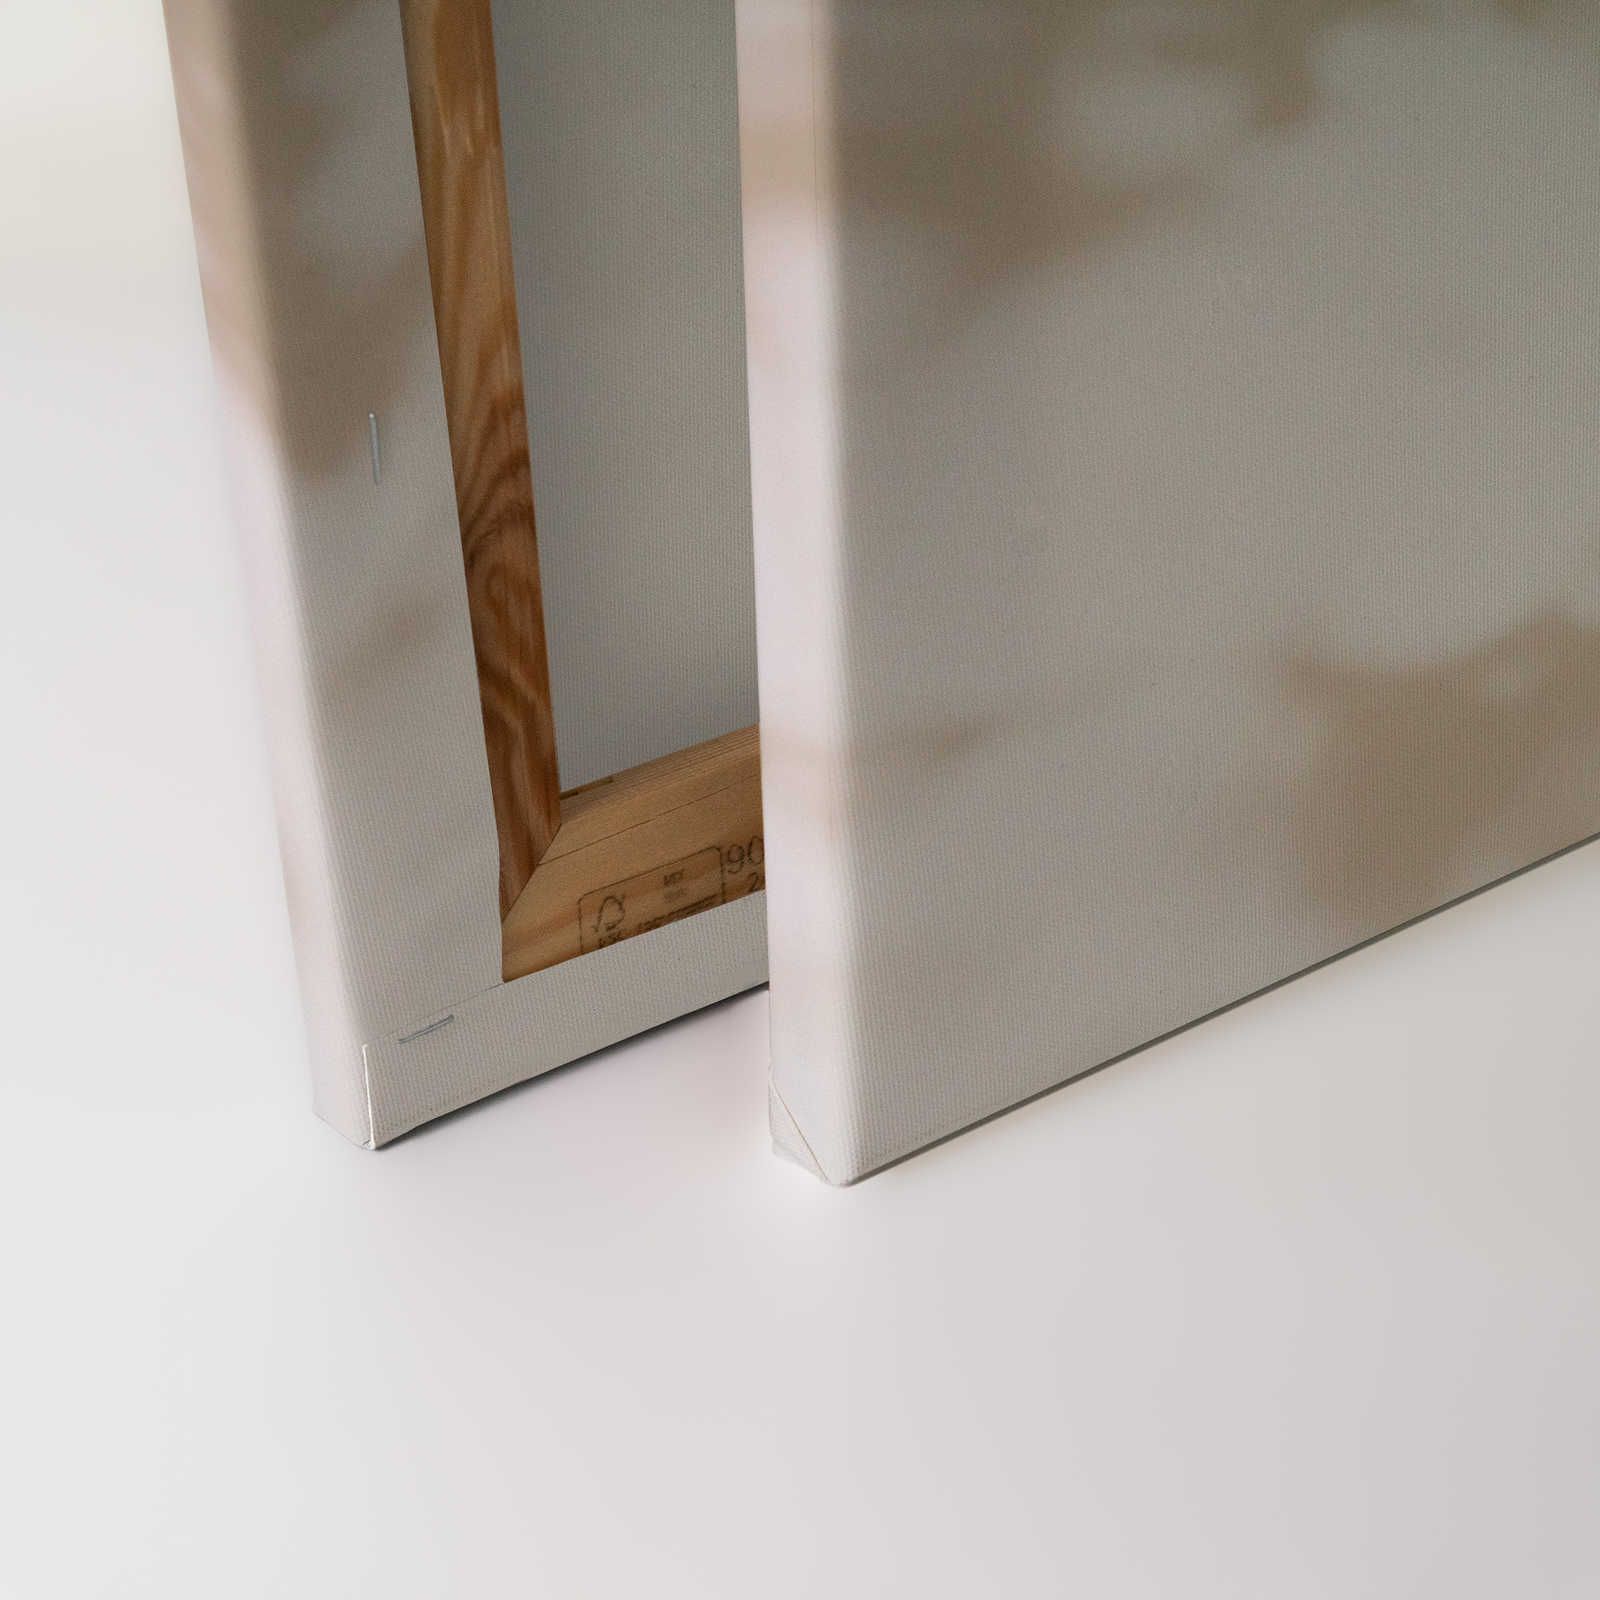             Light Room 3 - Cuadro en lienzo Sombras de la naturaleza en beige y blanco - 0,90 m x 0,60 m
        